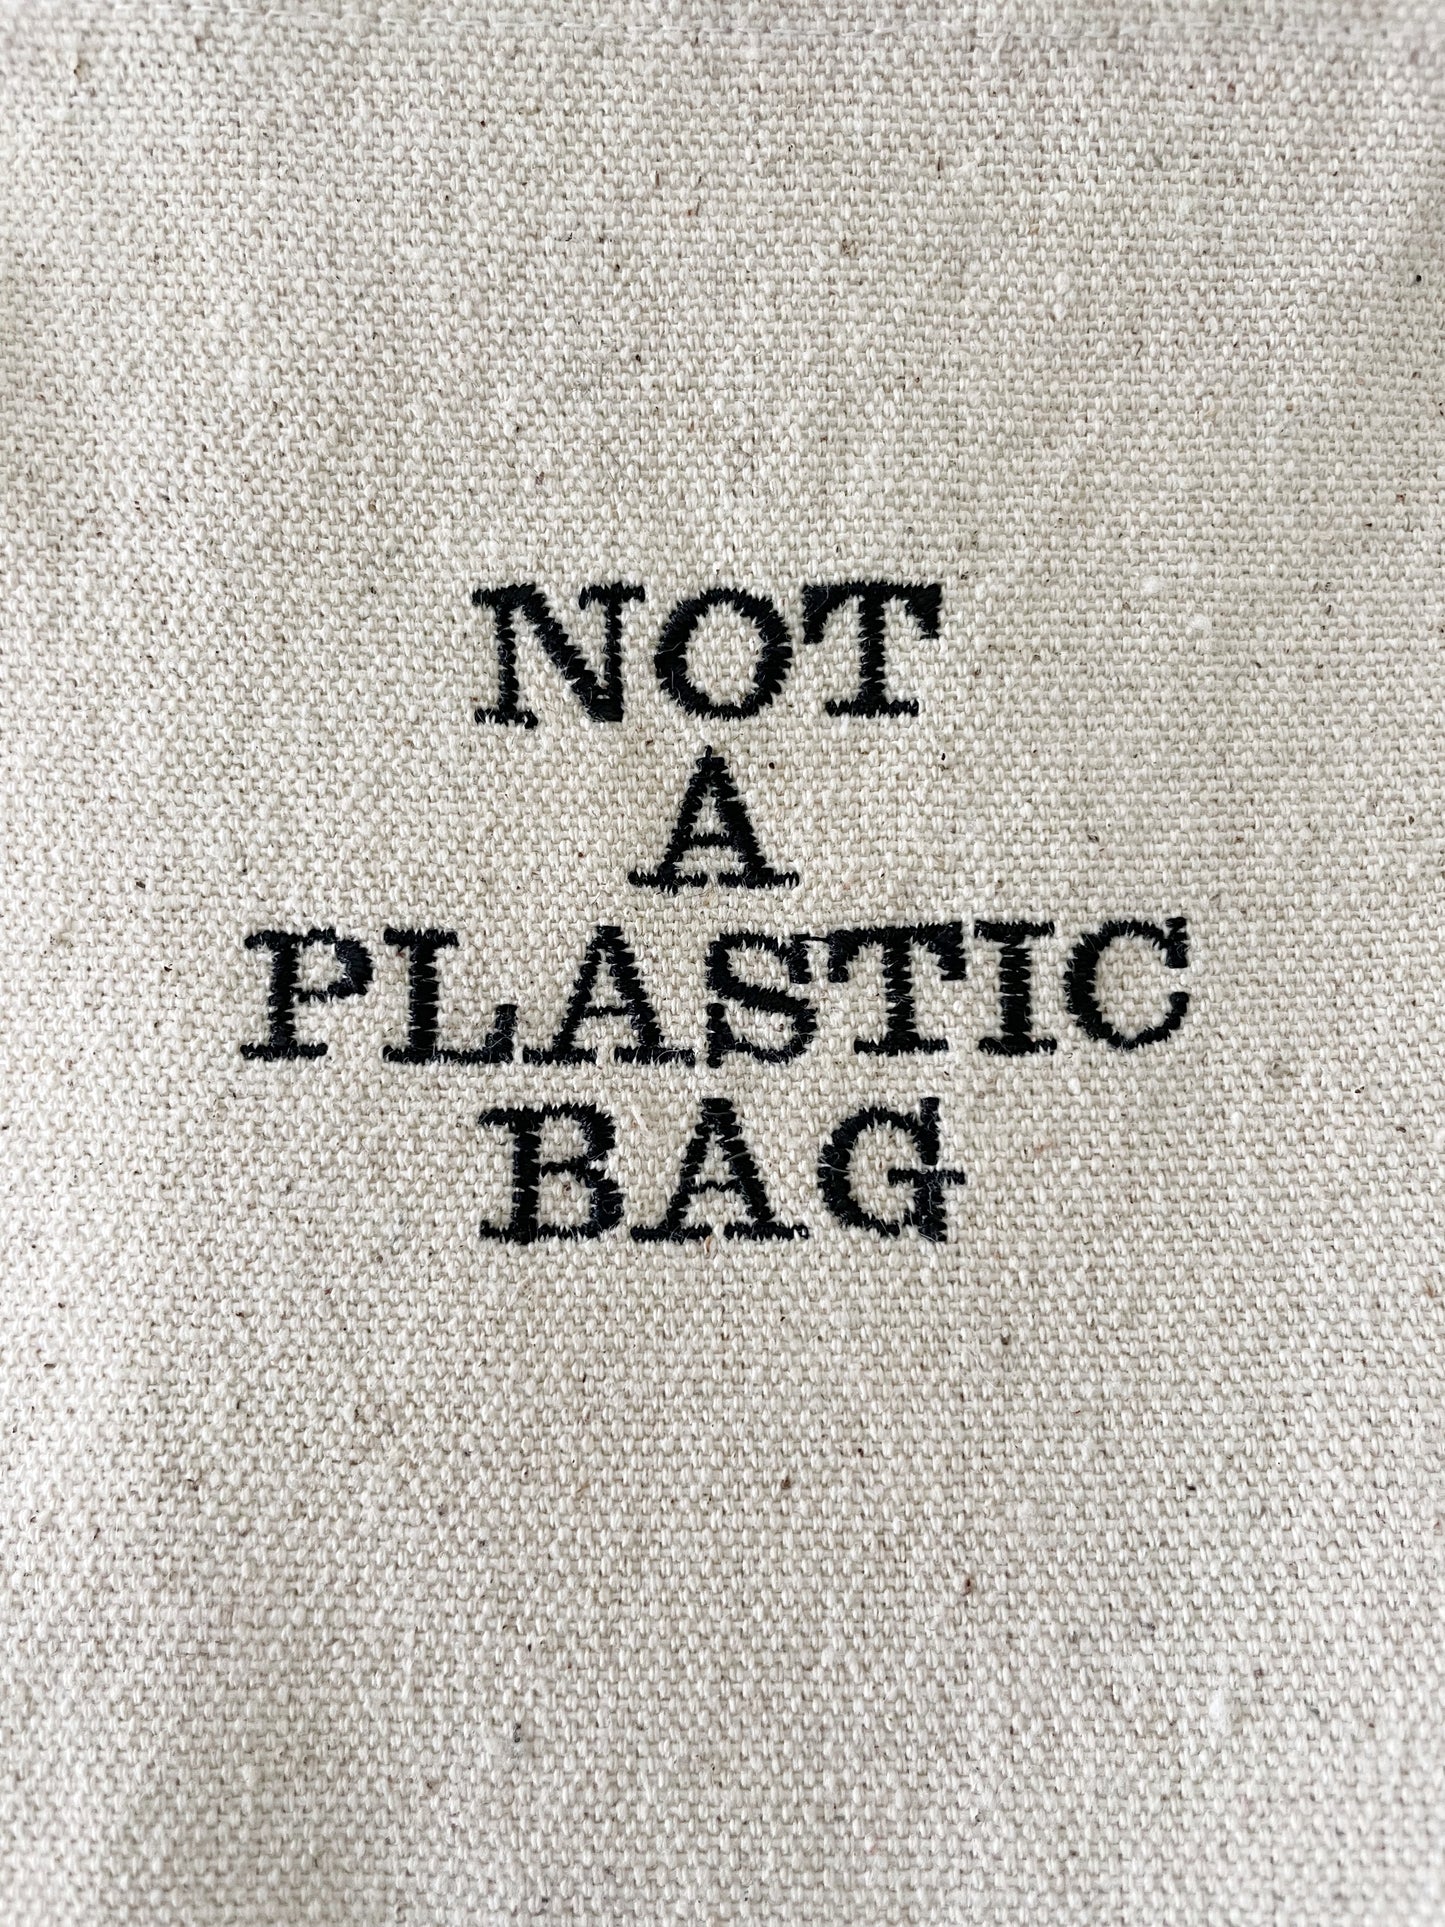 Not A Plastic Bag Tote